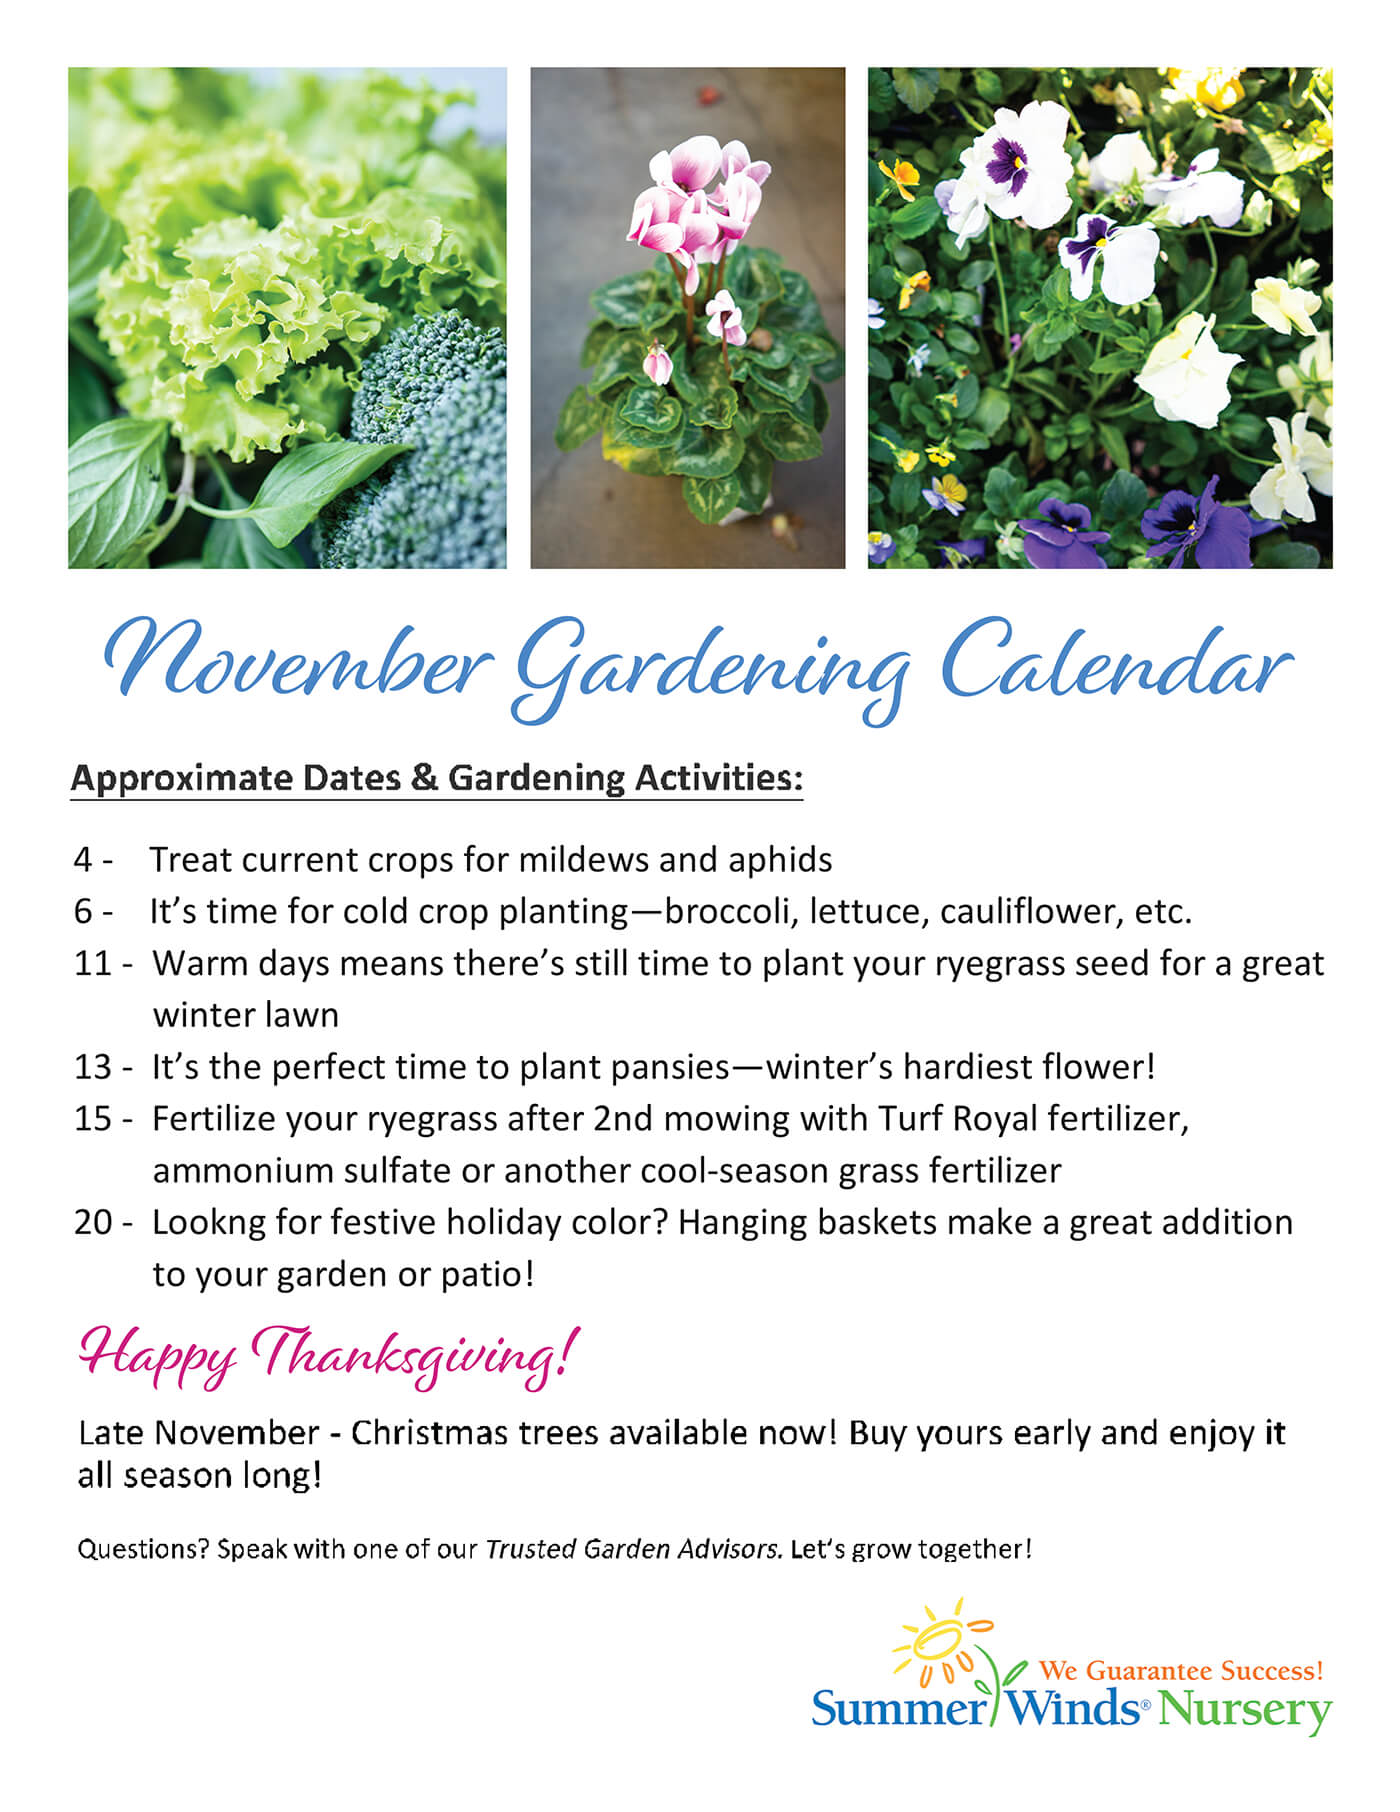 A jpg image of our November Gardening Calendar flyer